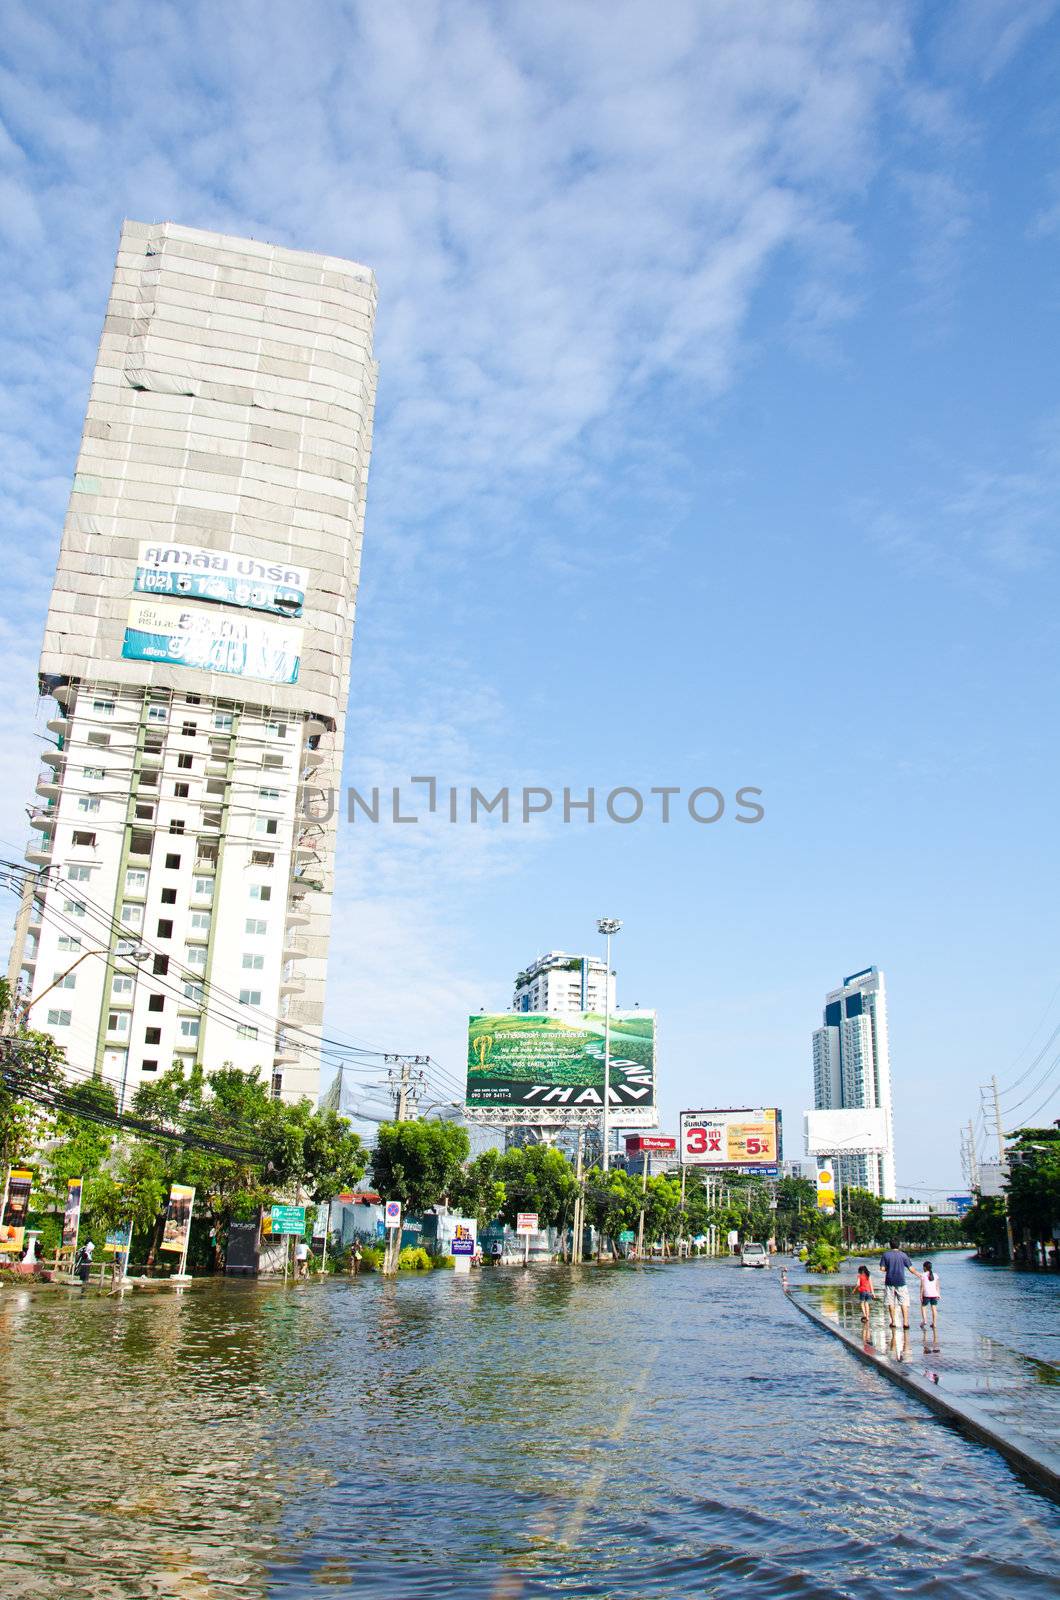 BANGKOK THAILAND – NOVEMBER 13: Scenes from Bangkok during its worst flooding in decades is a major disaster on November 13, 2011  in Bangkok, Thailand.